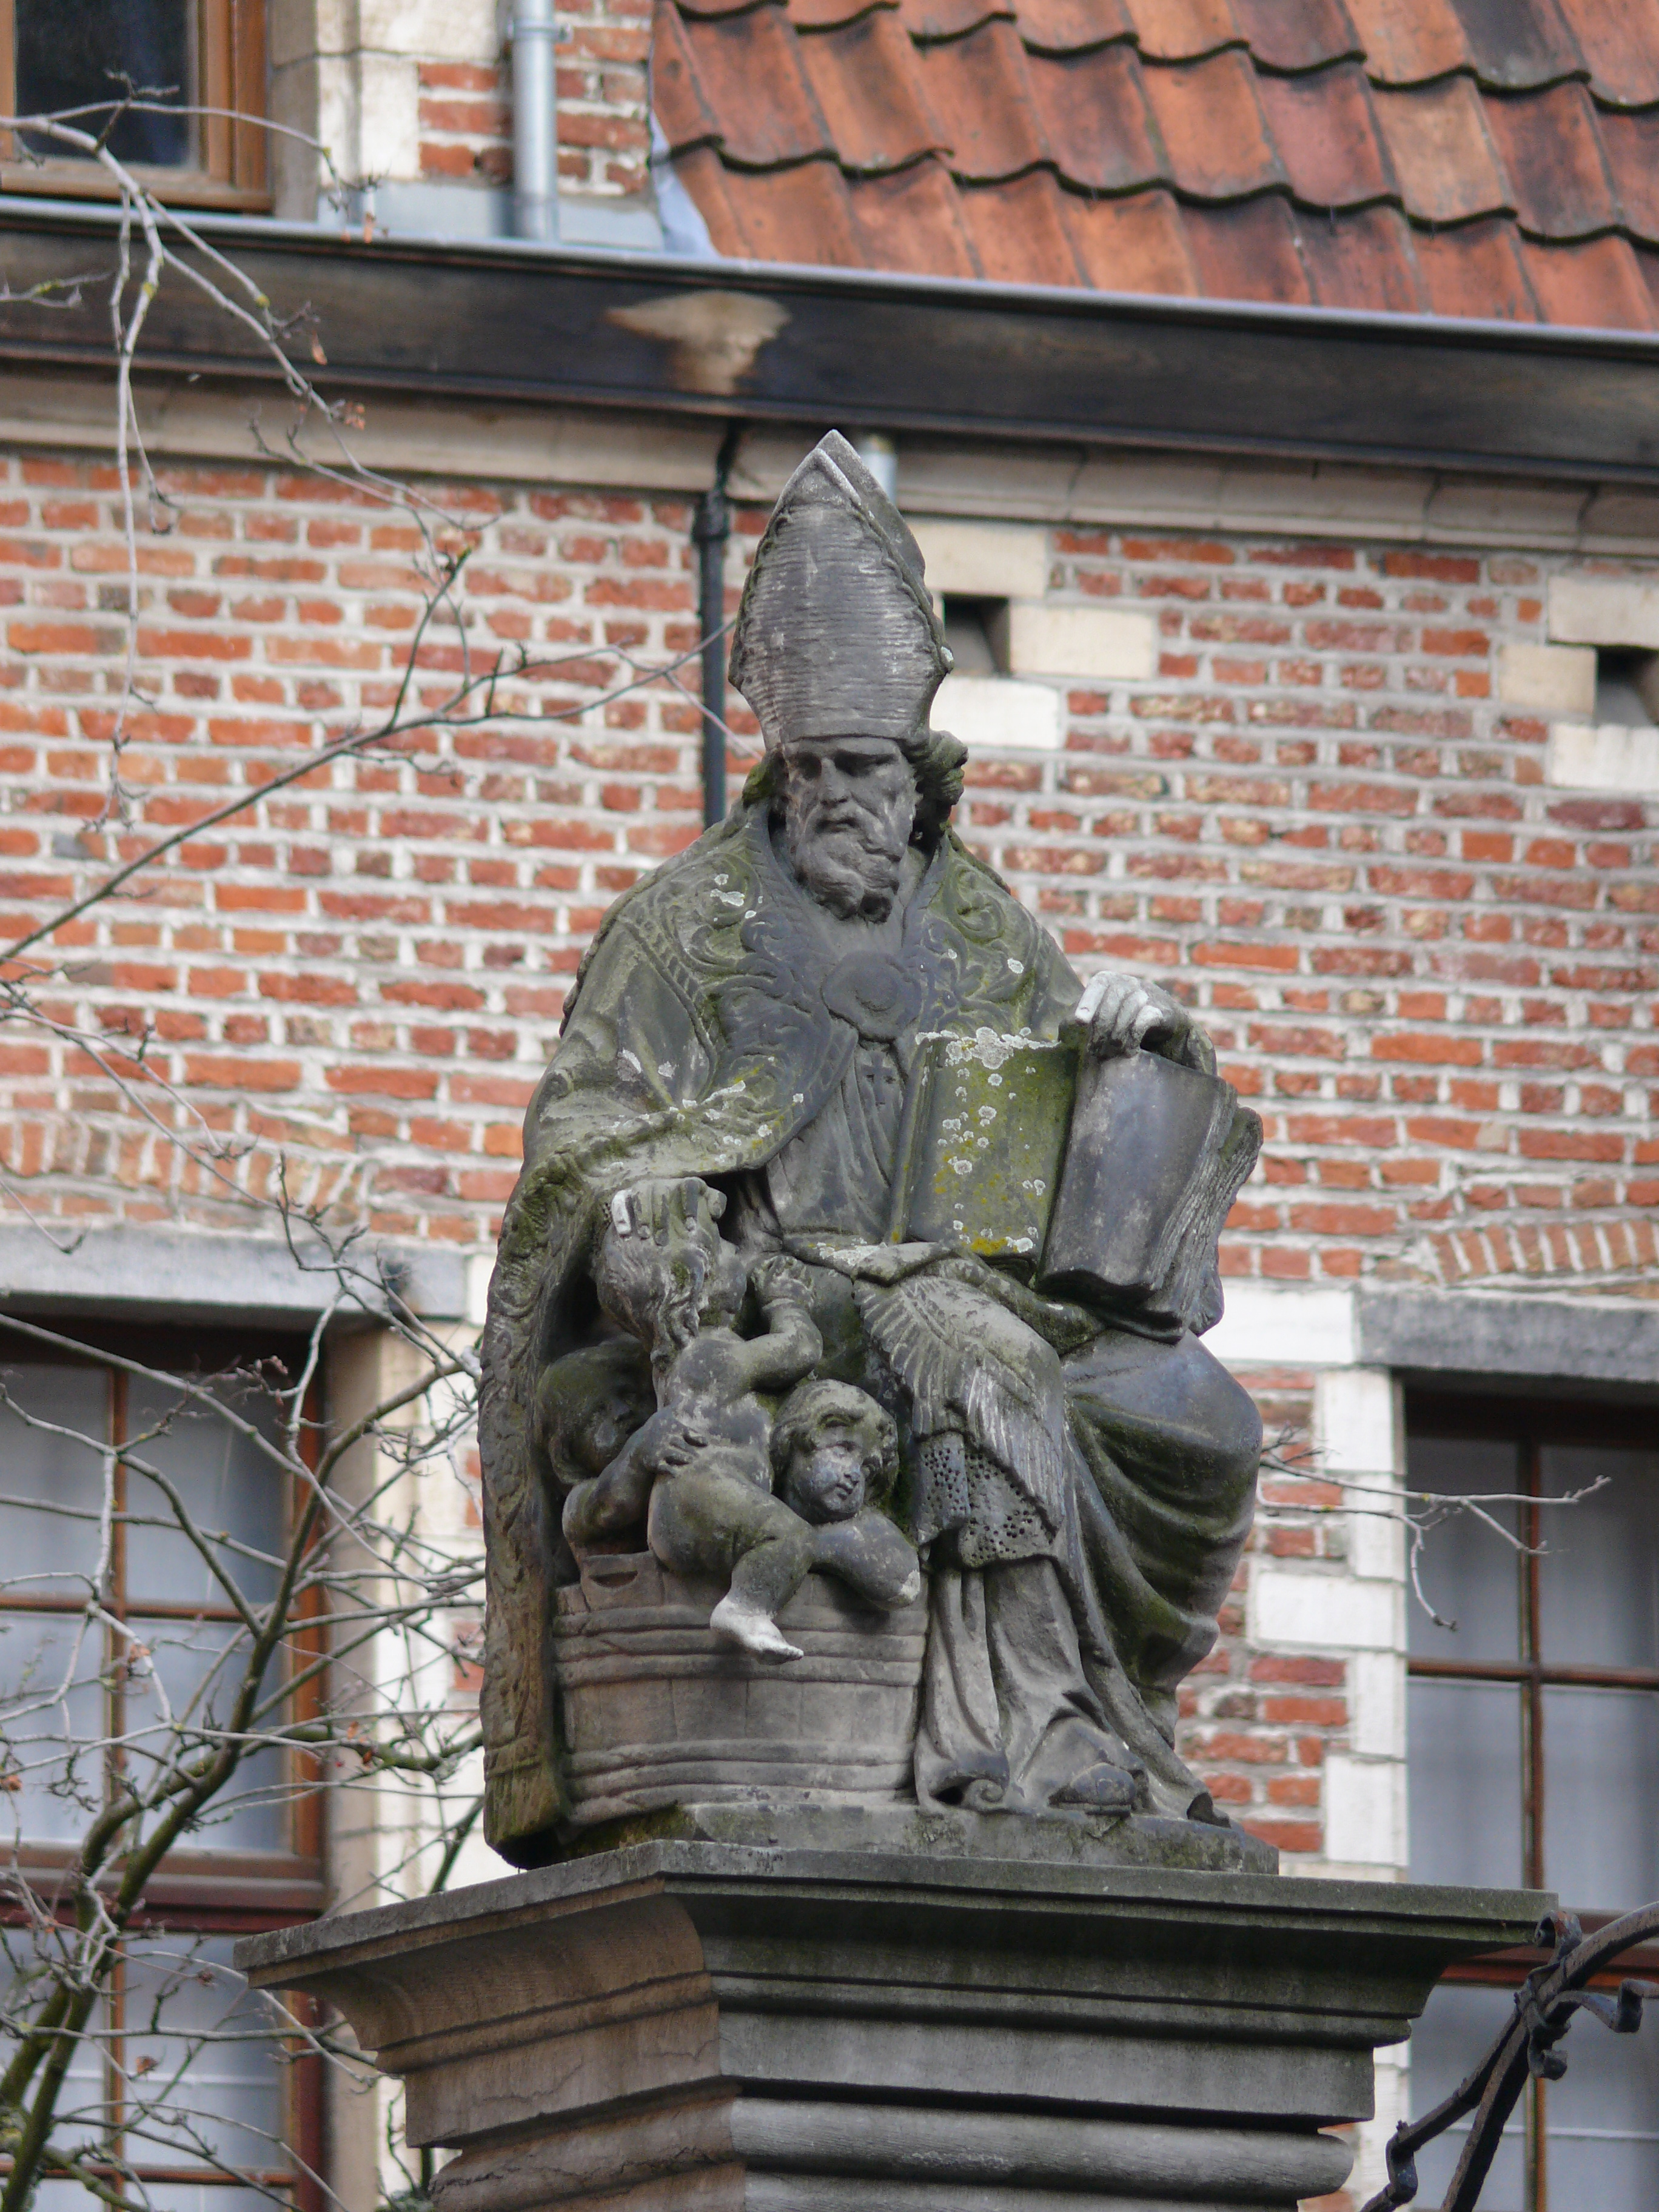 A statue in Antwerp of Saint Nicholas.